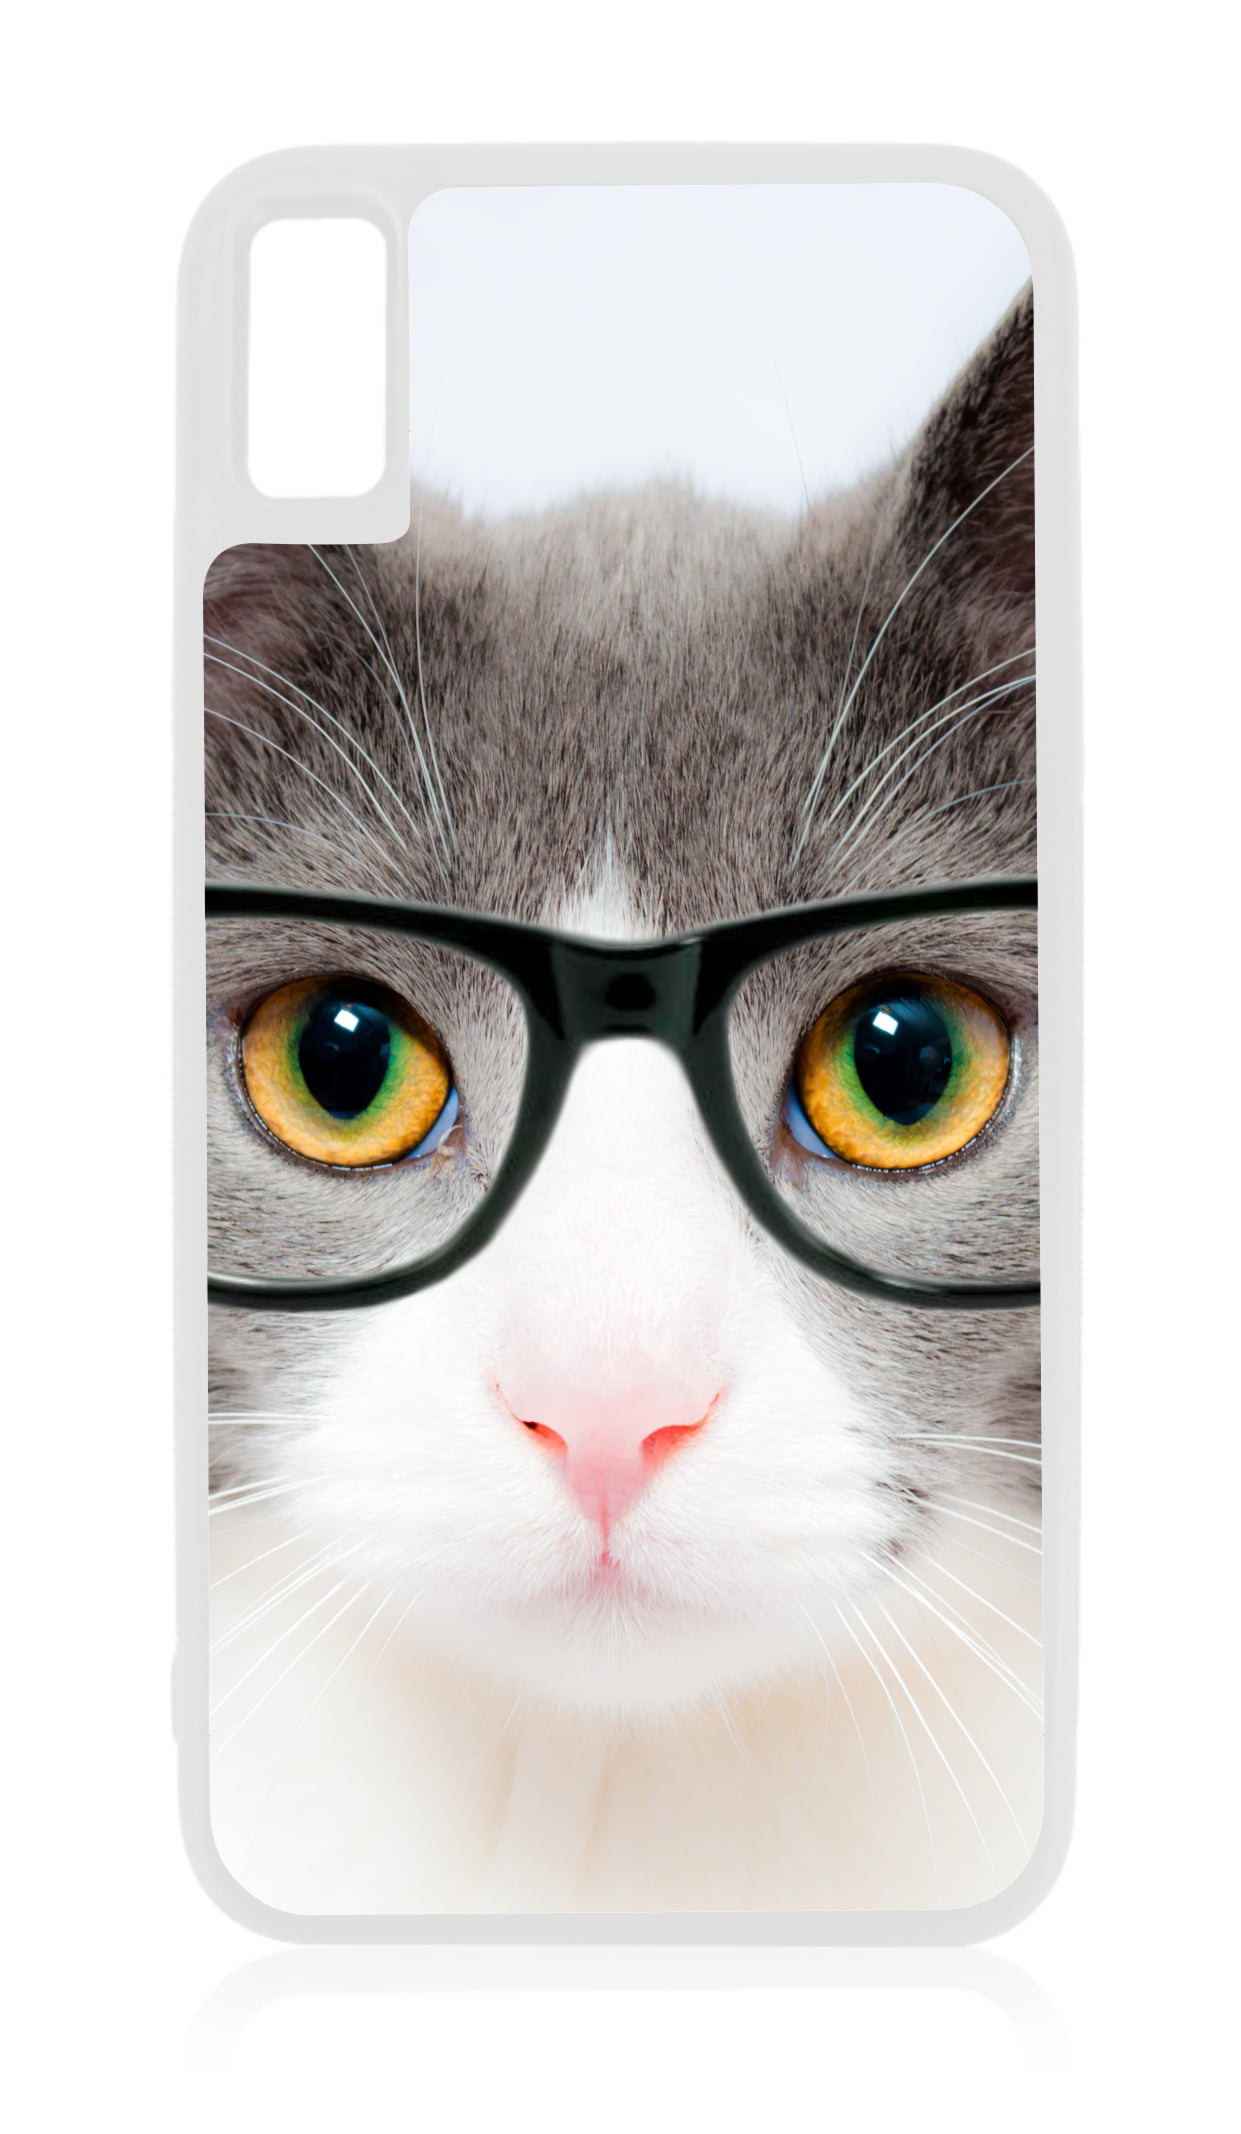 Kitten with Glasses Design White Rubber Case for iPhone XR - iPhone XR Phone Case - iPhone Accessories - Walmart.com